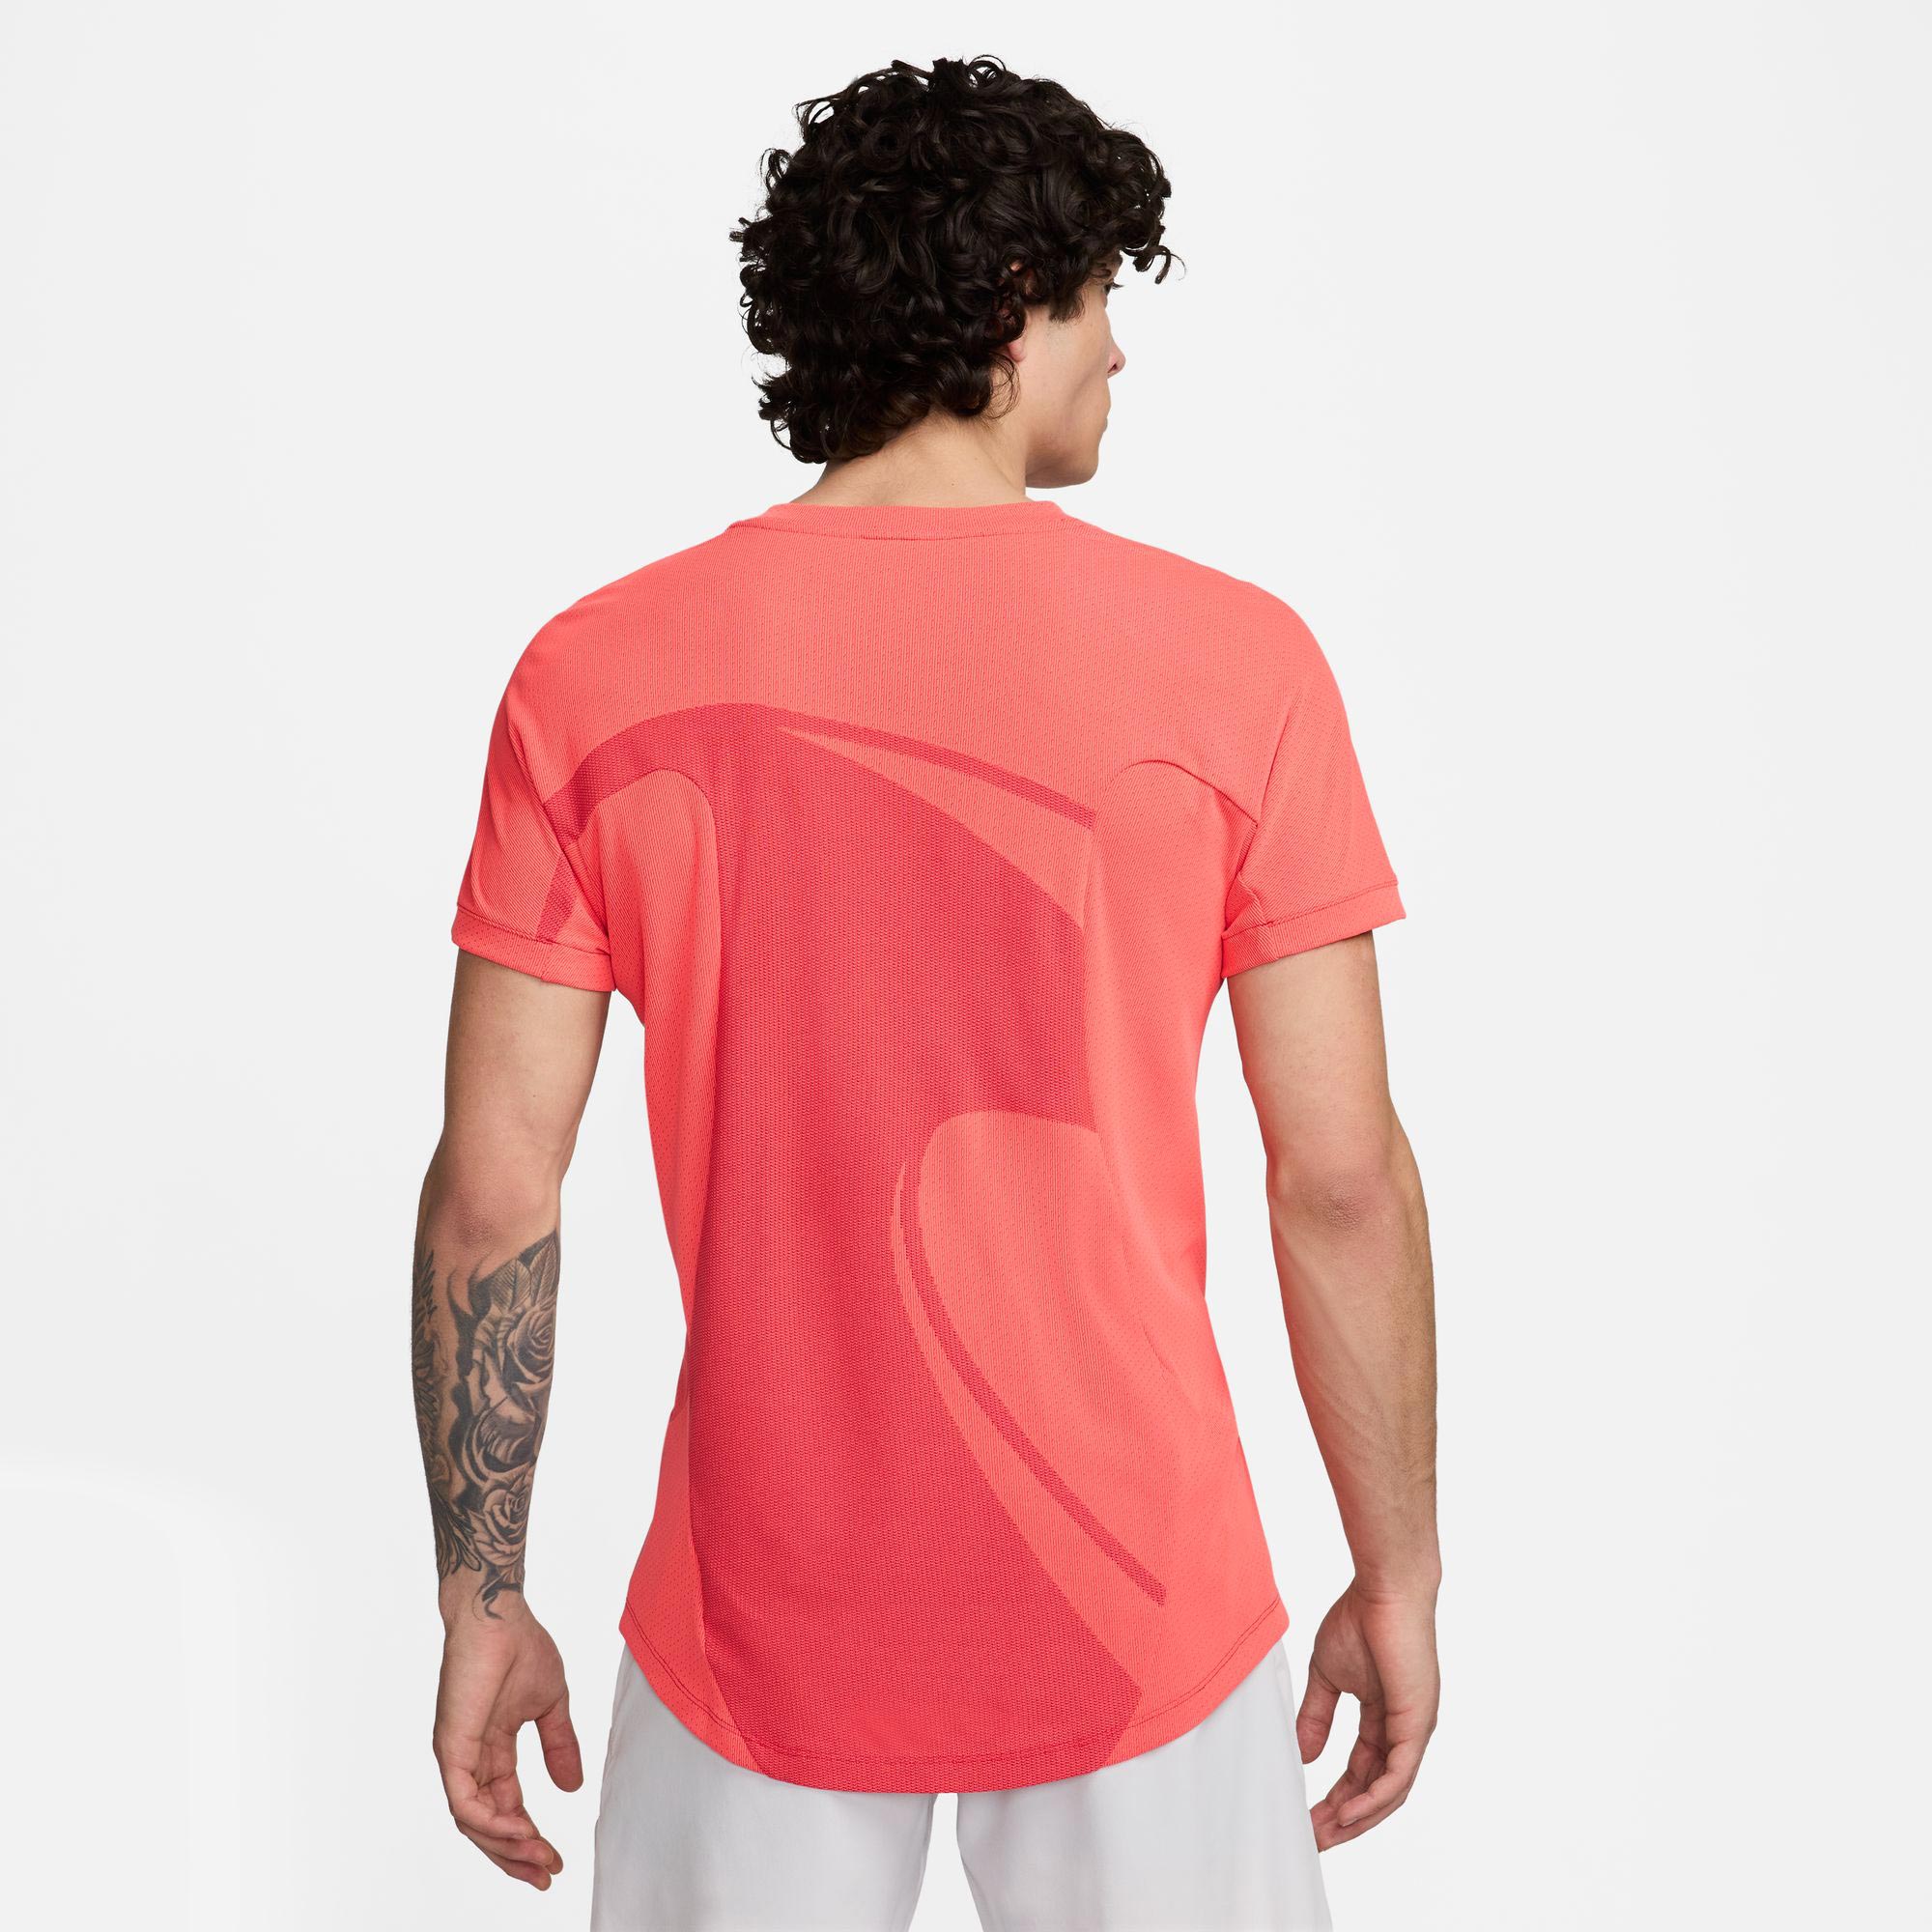 Nike Rafa Men's Dri-FIT ADV Tennis Shirt - Red (2)